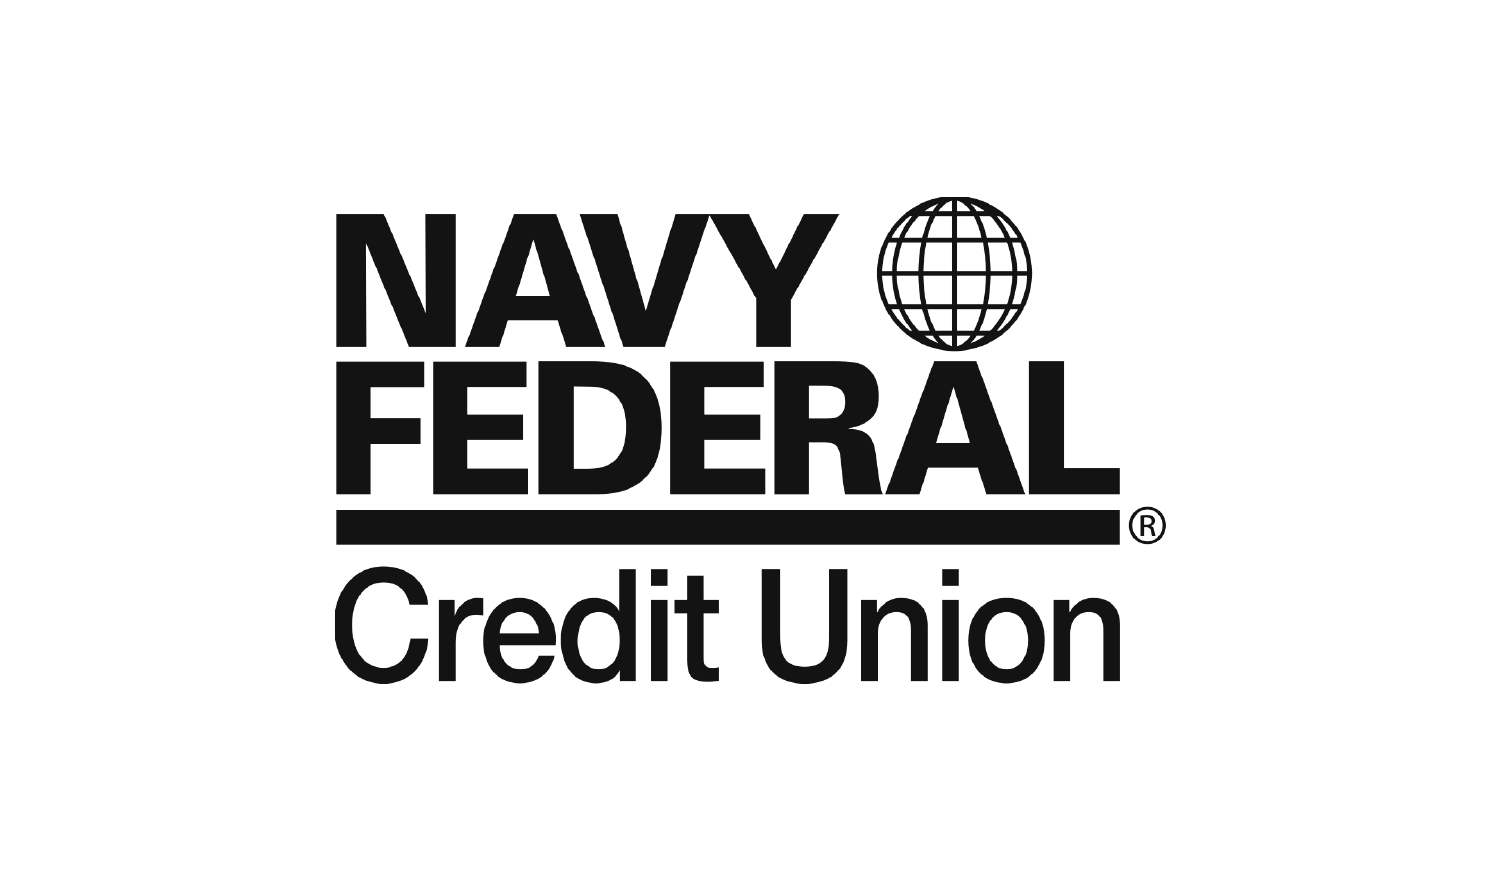 Navy Fed